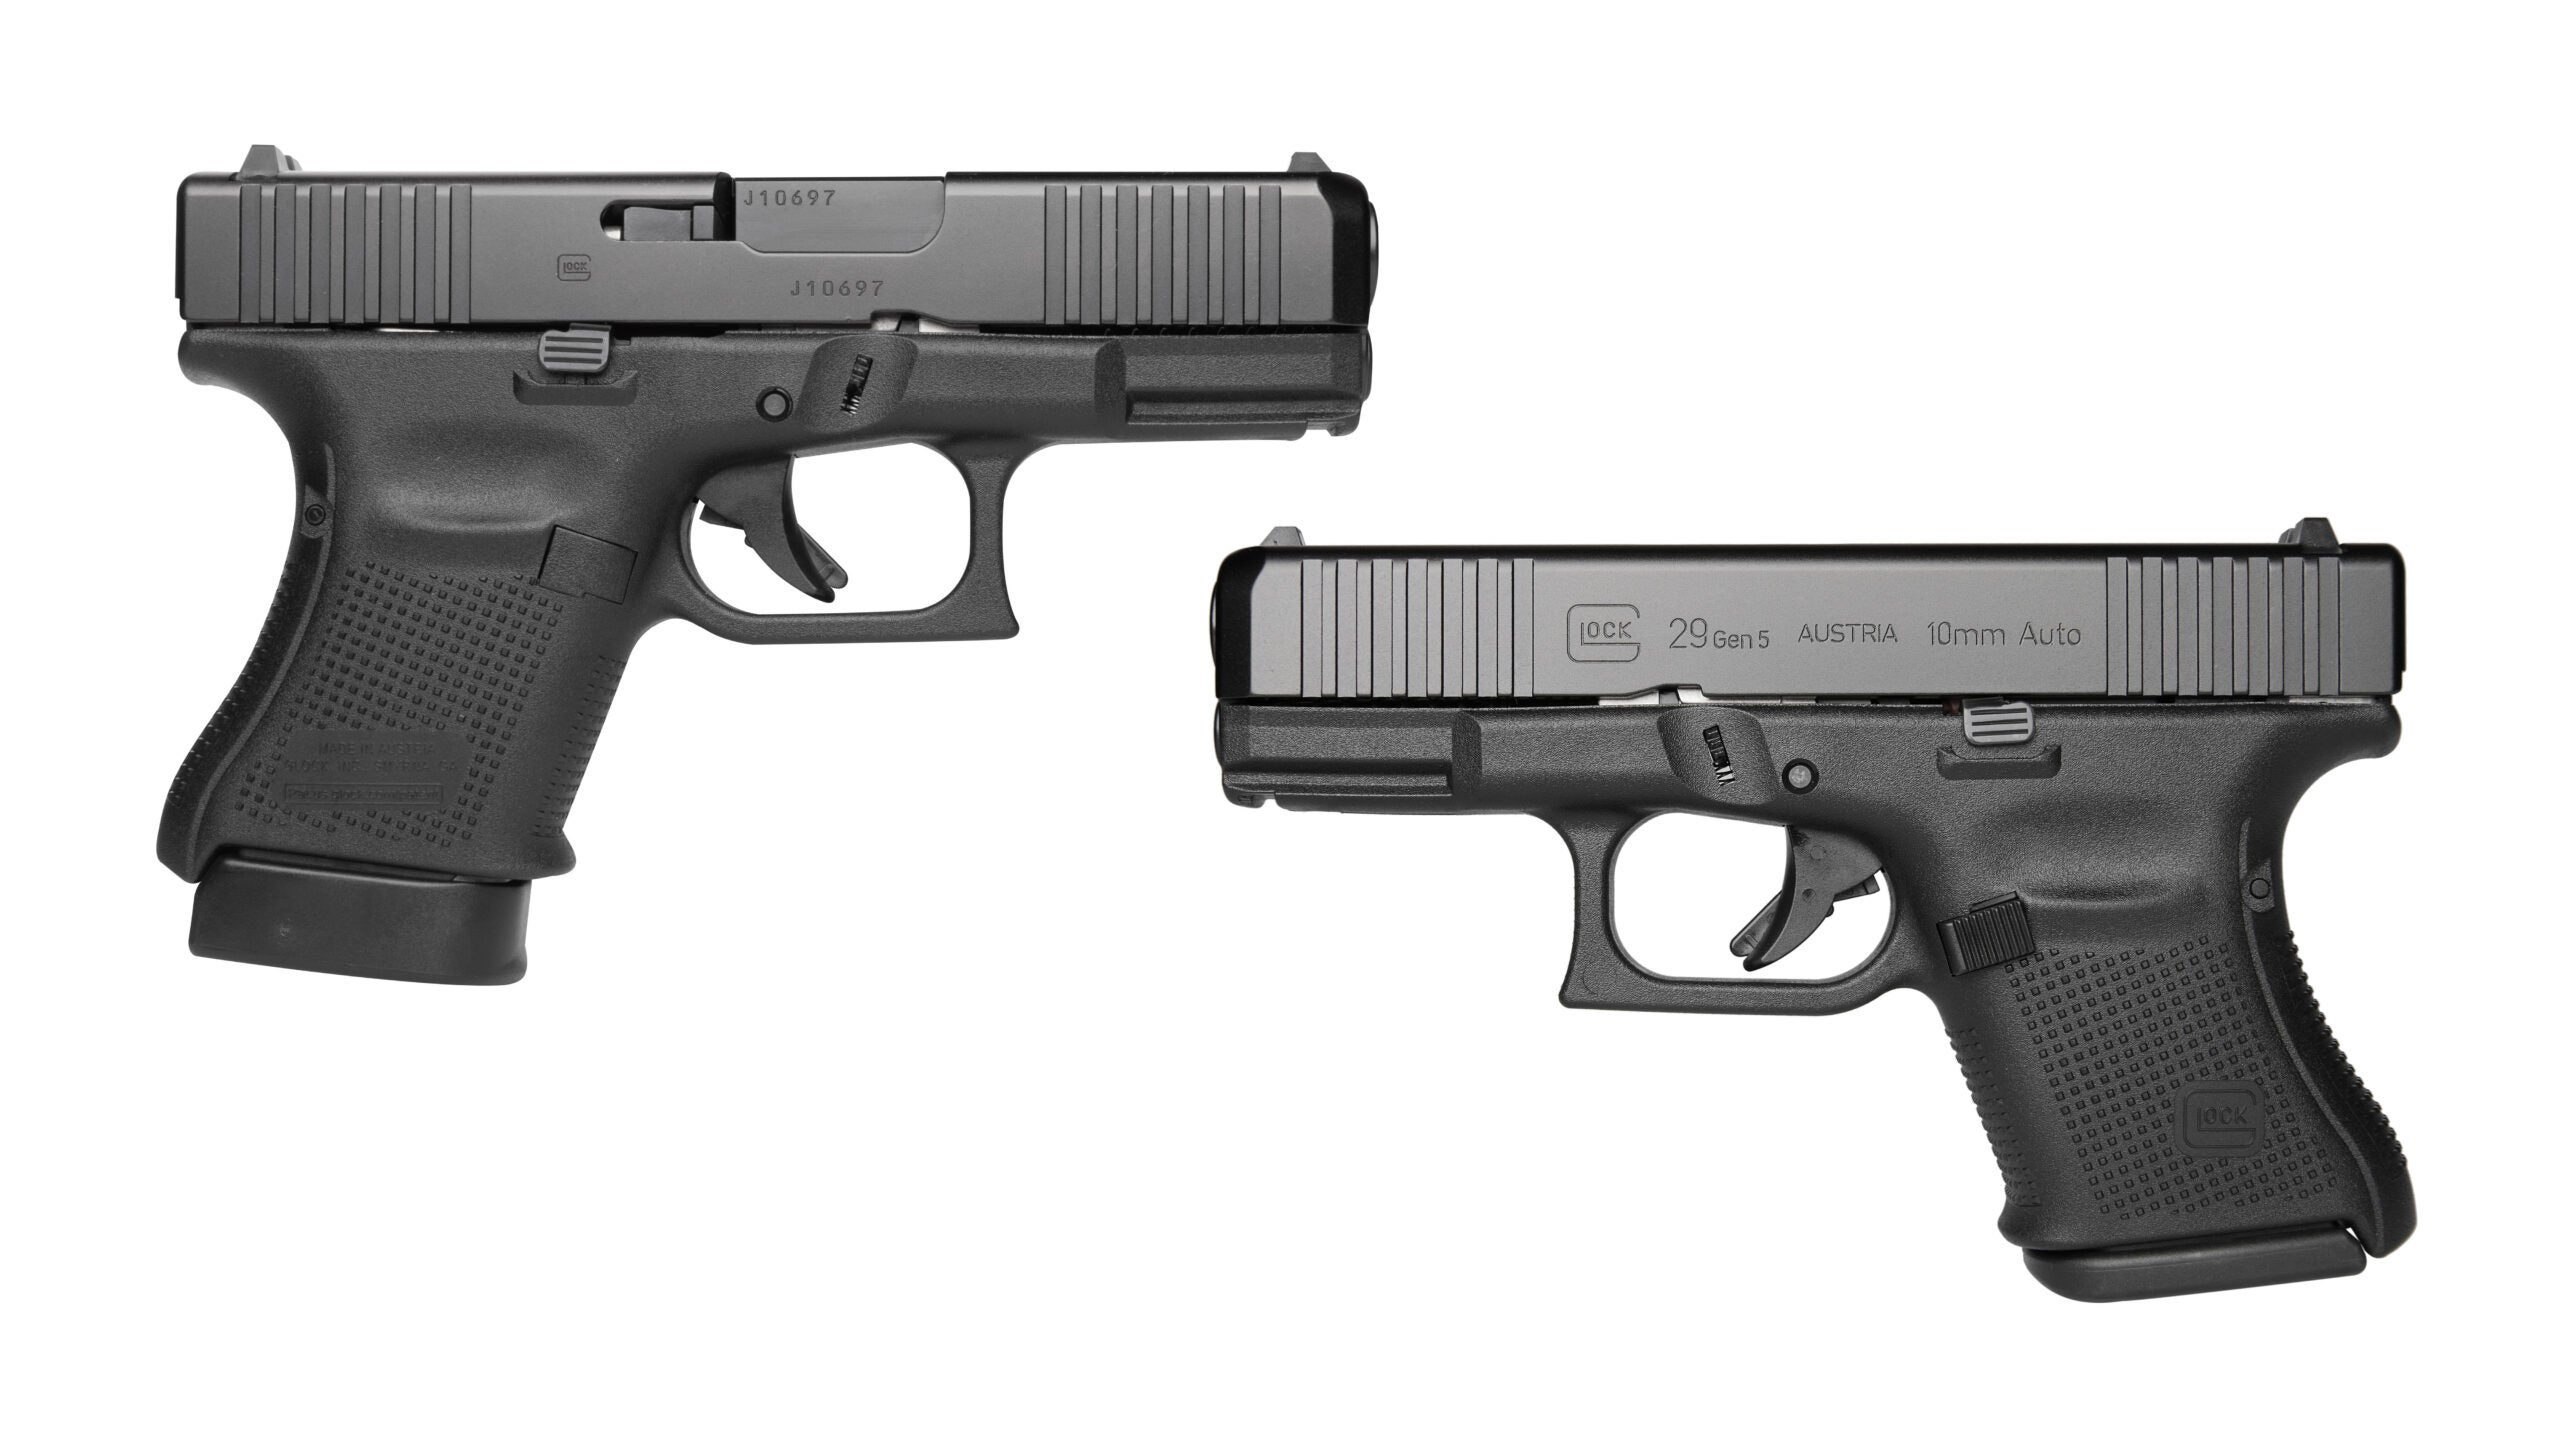 Glock G29 & G30 pistols on a white background